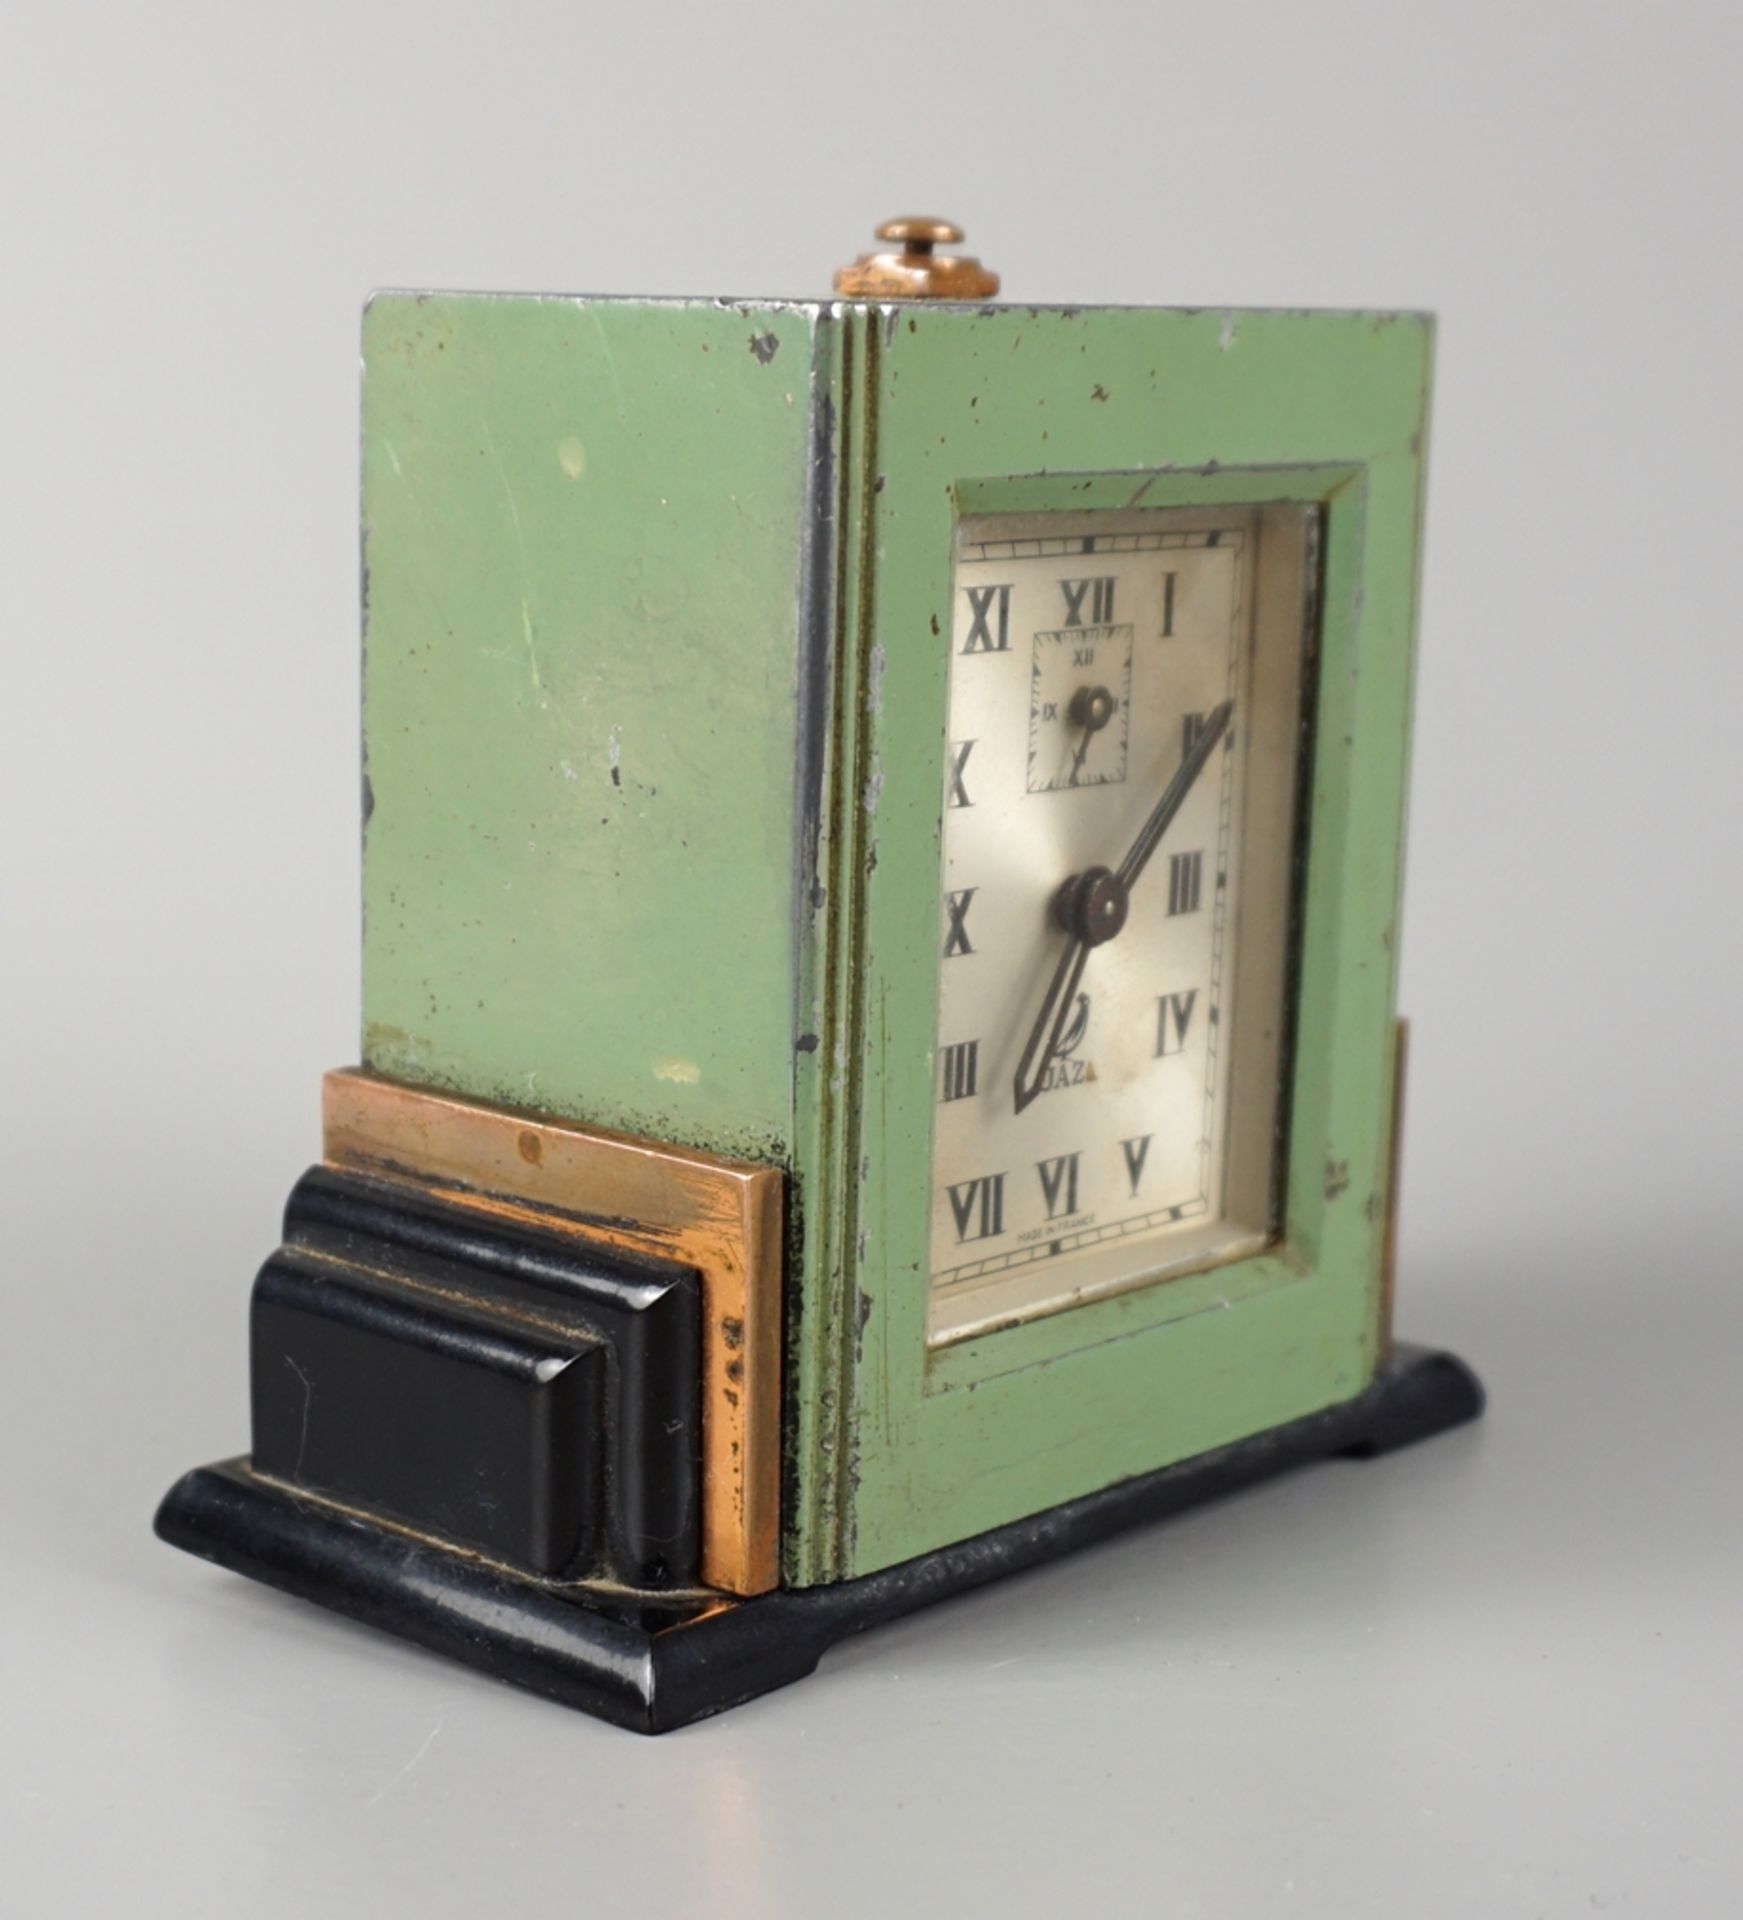 Art Deco alarm clock, JAZ, France, 1930s - Image 2 of 3